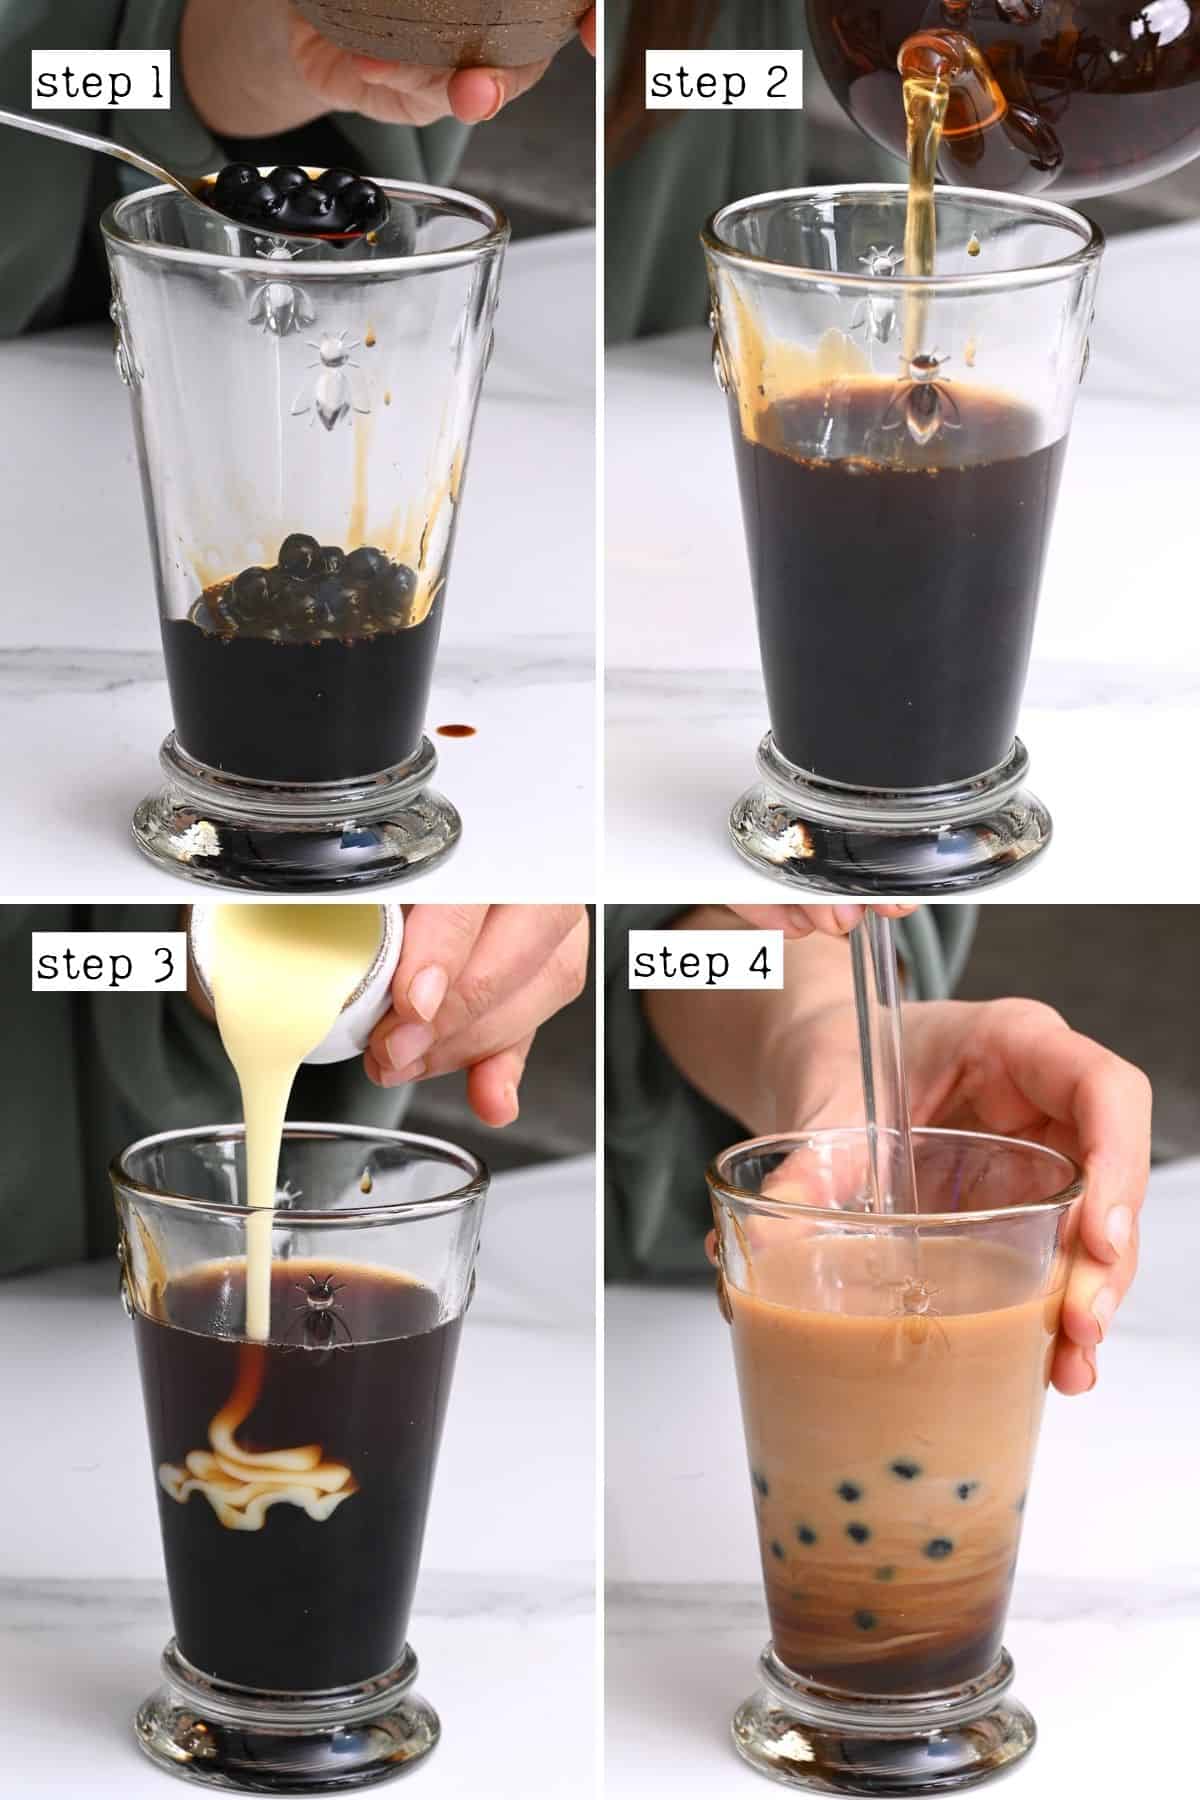 How to Make Bubble Tea (Boba Tea, 波霸奶茶/珍珠奶茶)